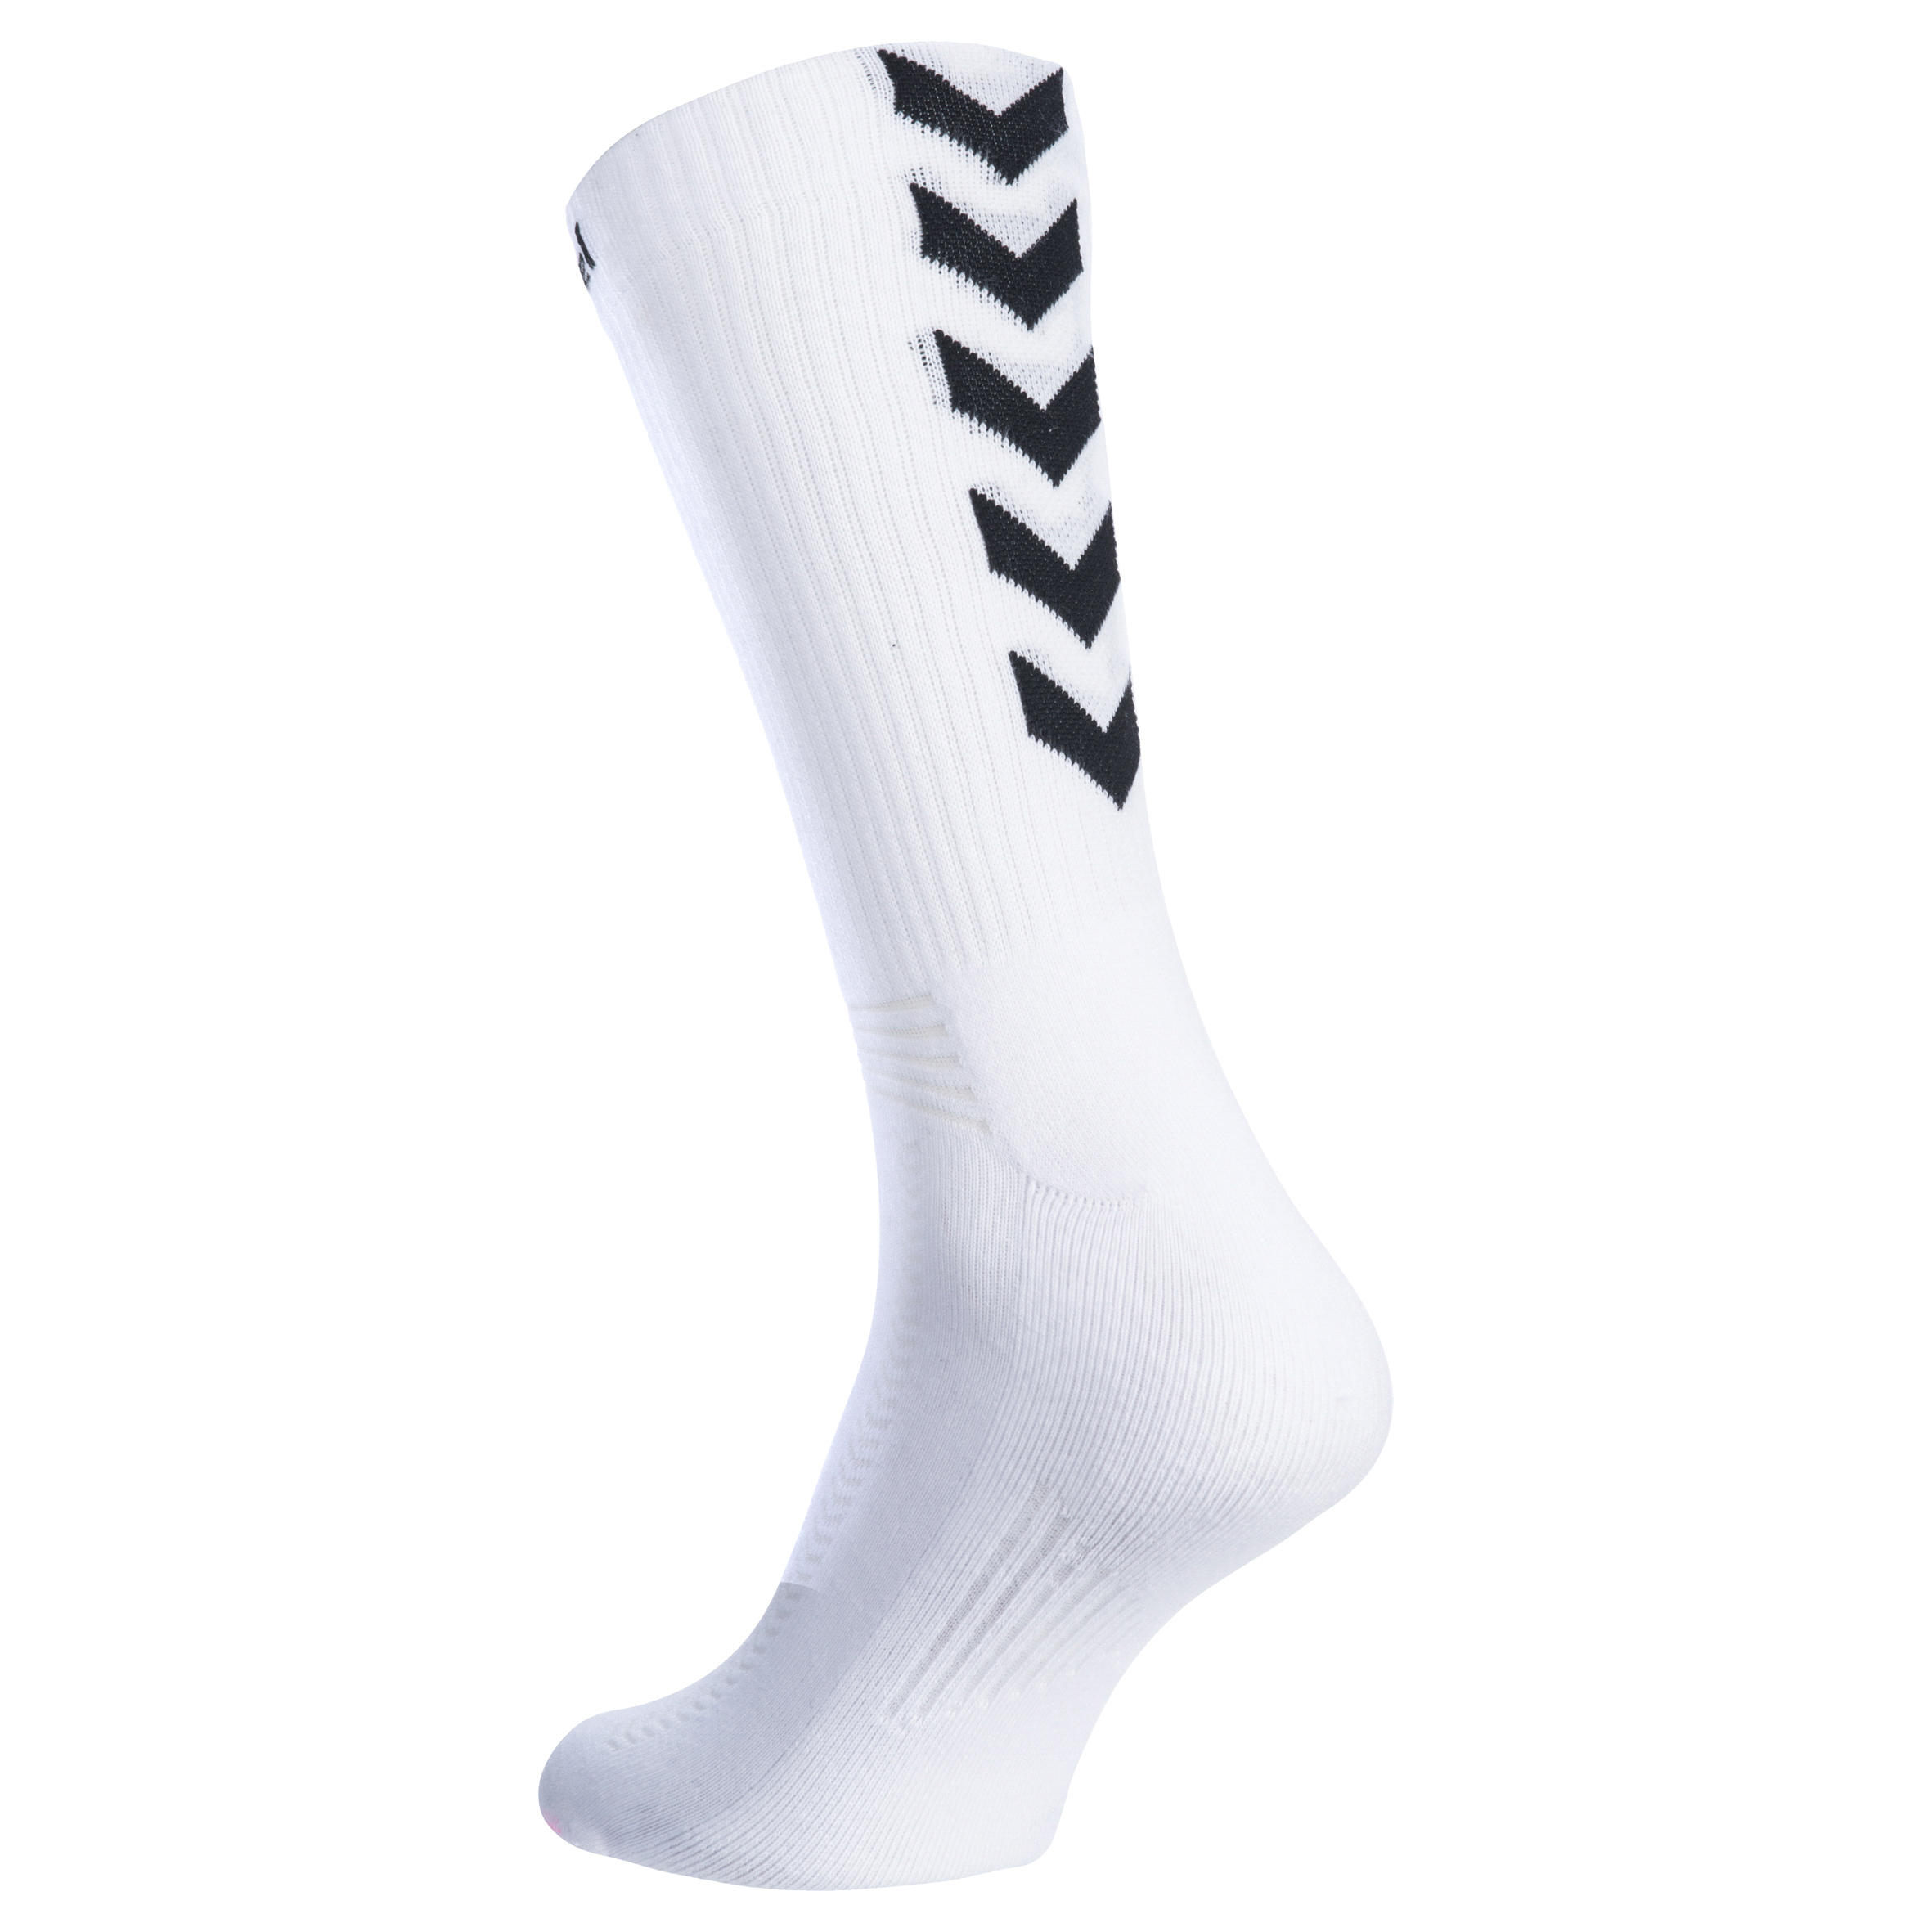 Adult Handball Socks - White/Black 3/4